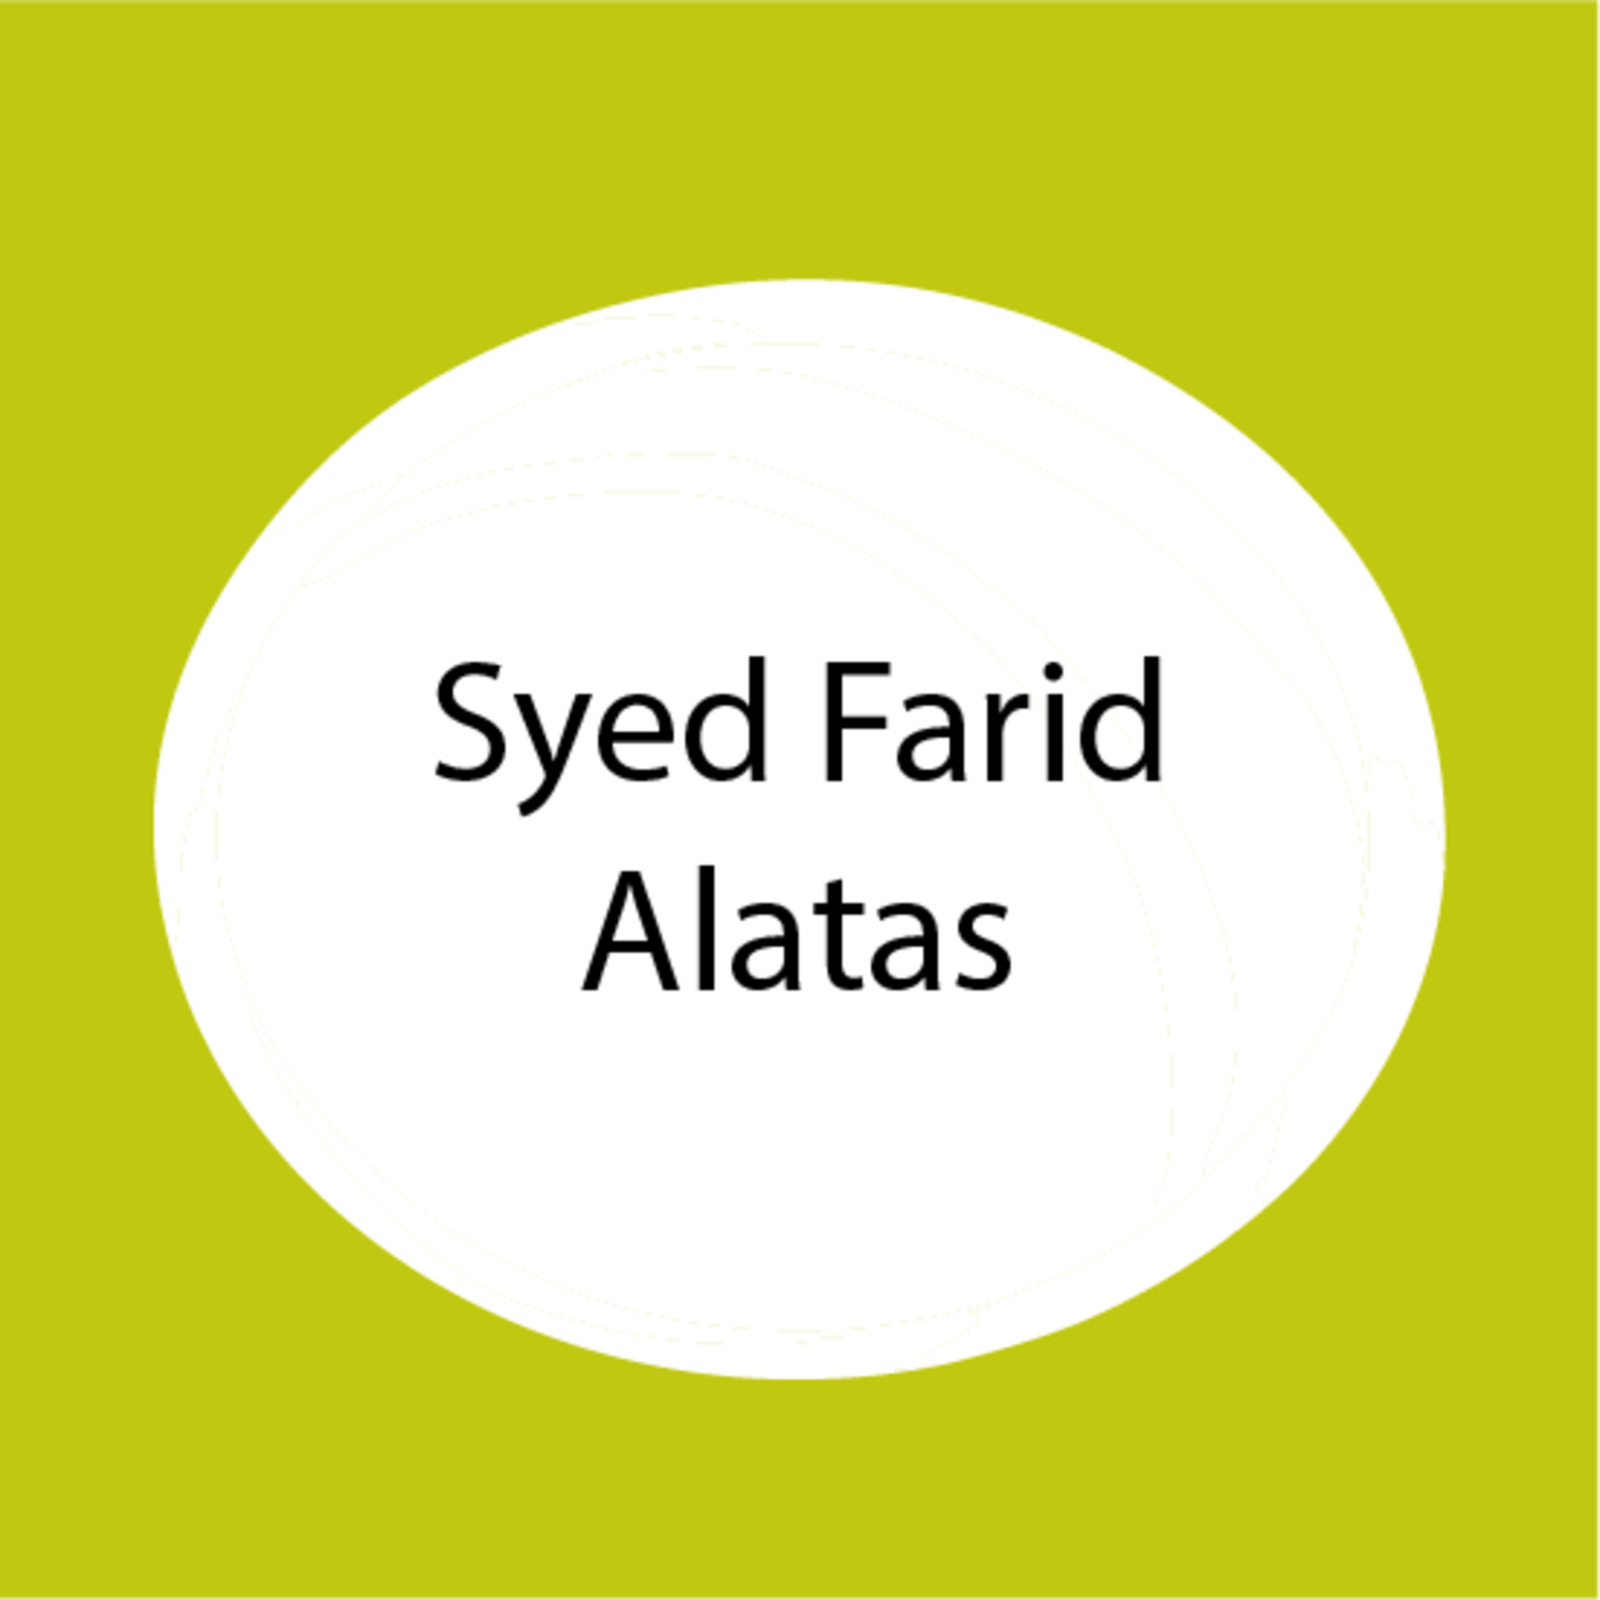 Syed Farid Alatas